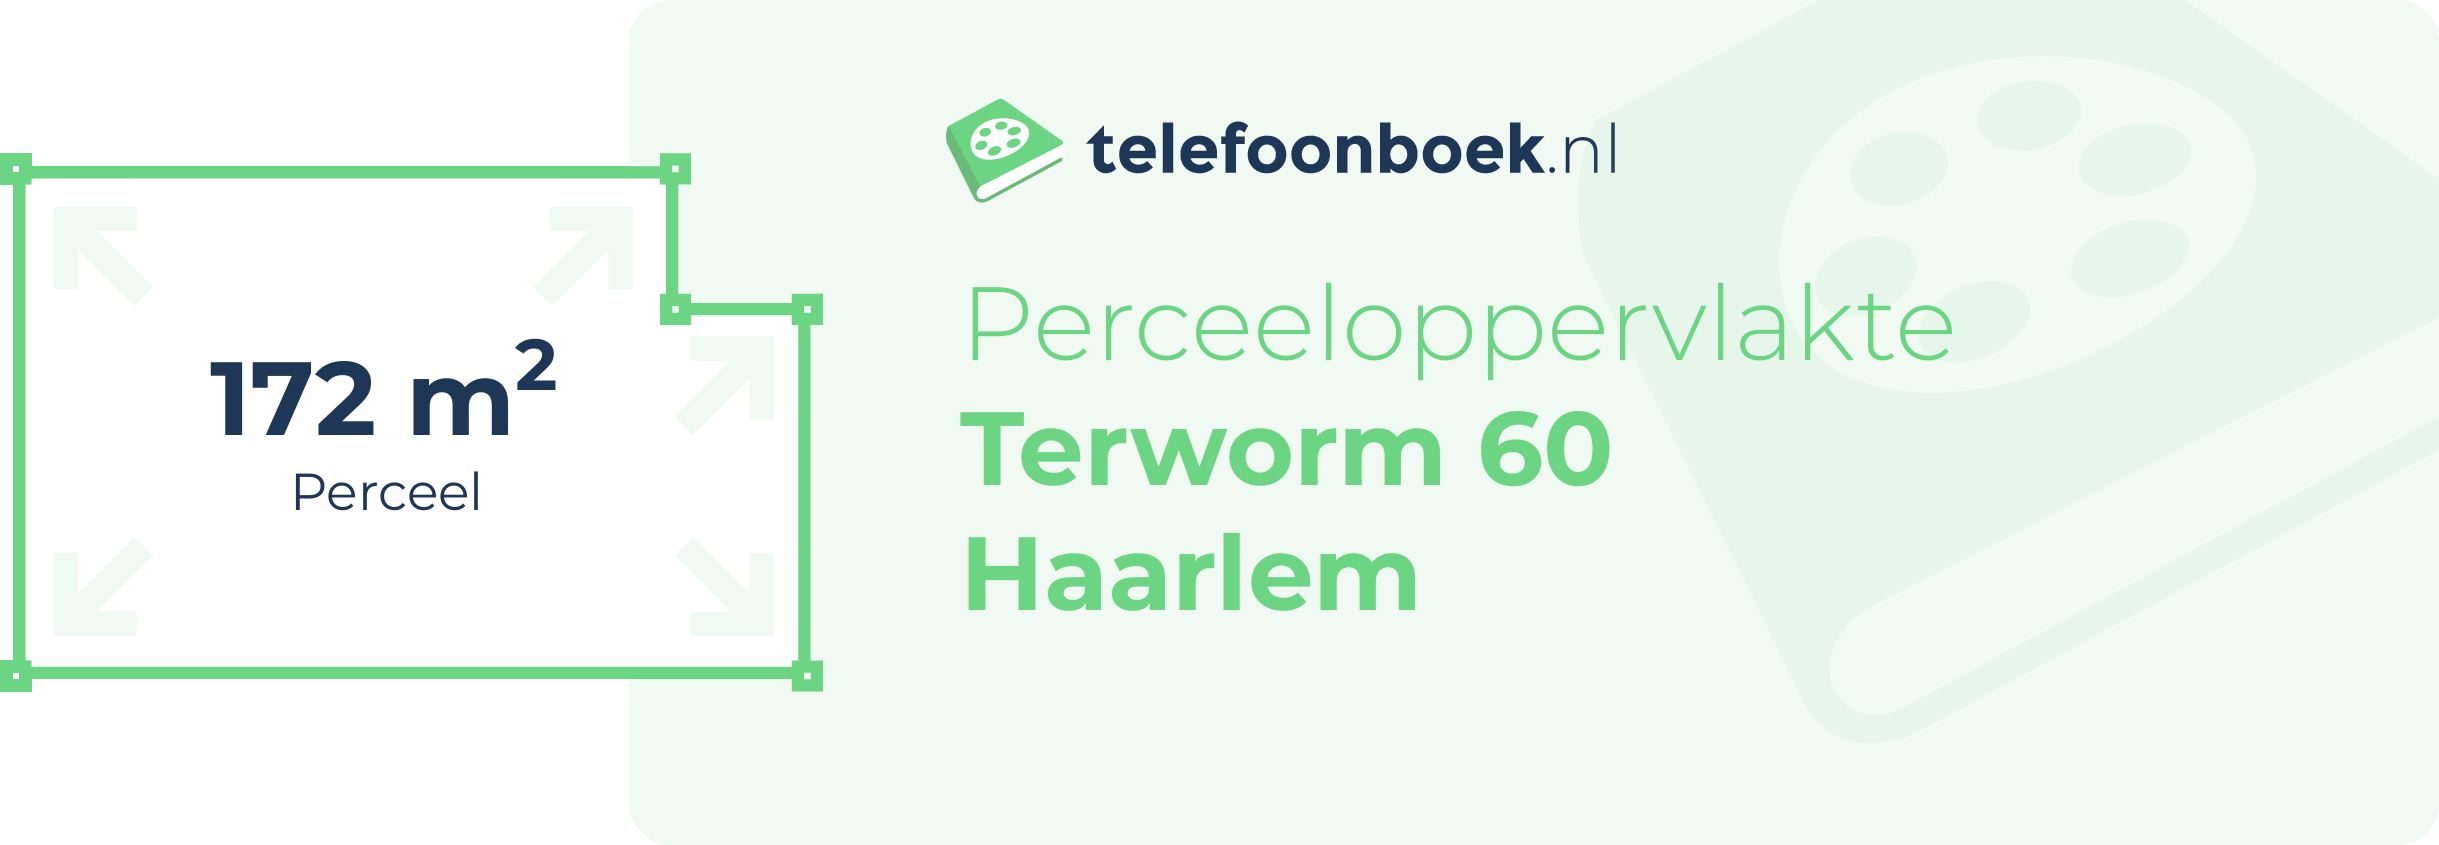 Perceeloppervlakte Terworm 60 Haarlem